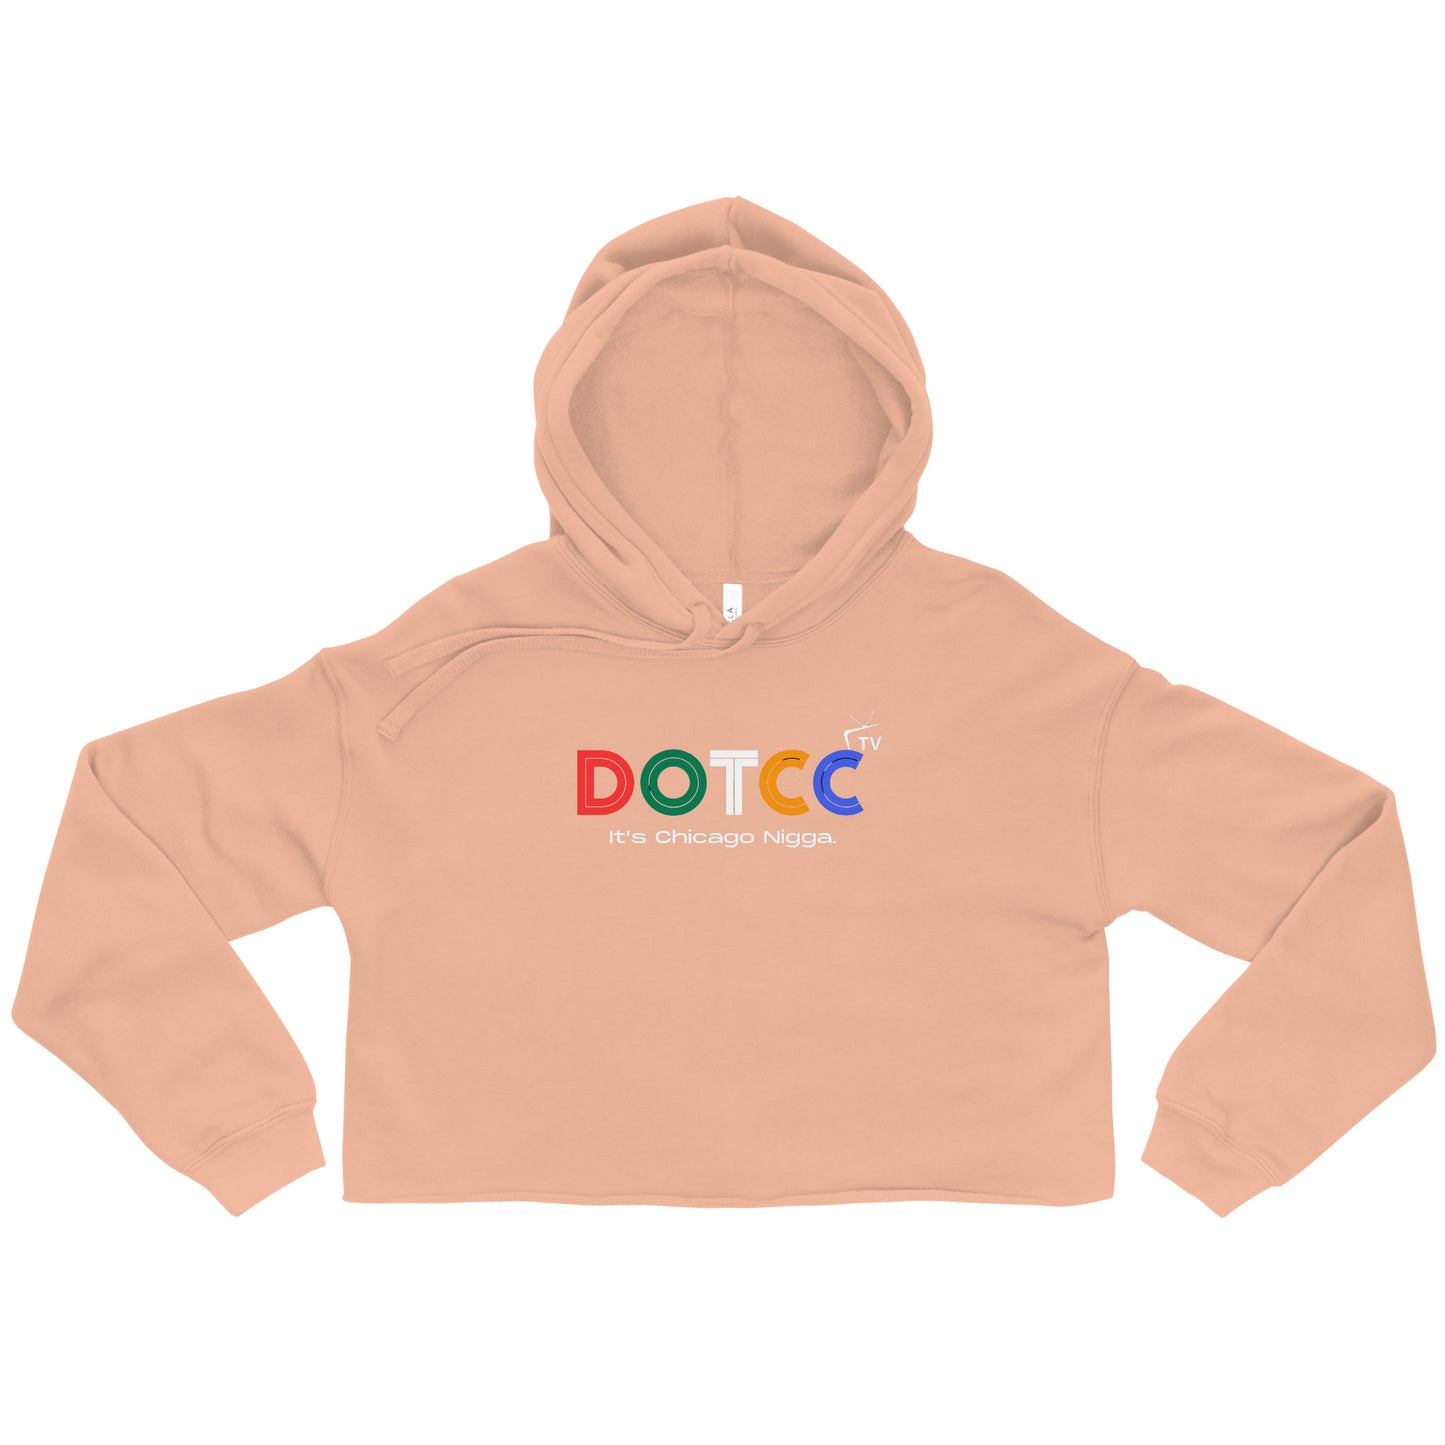 DOTCC Logo Crop Hoodie